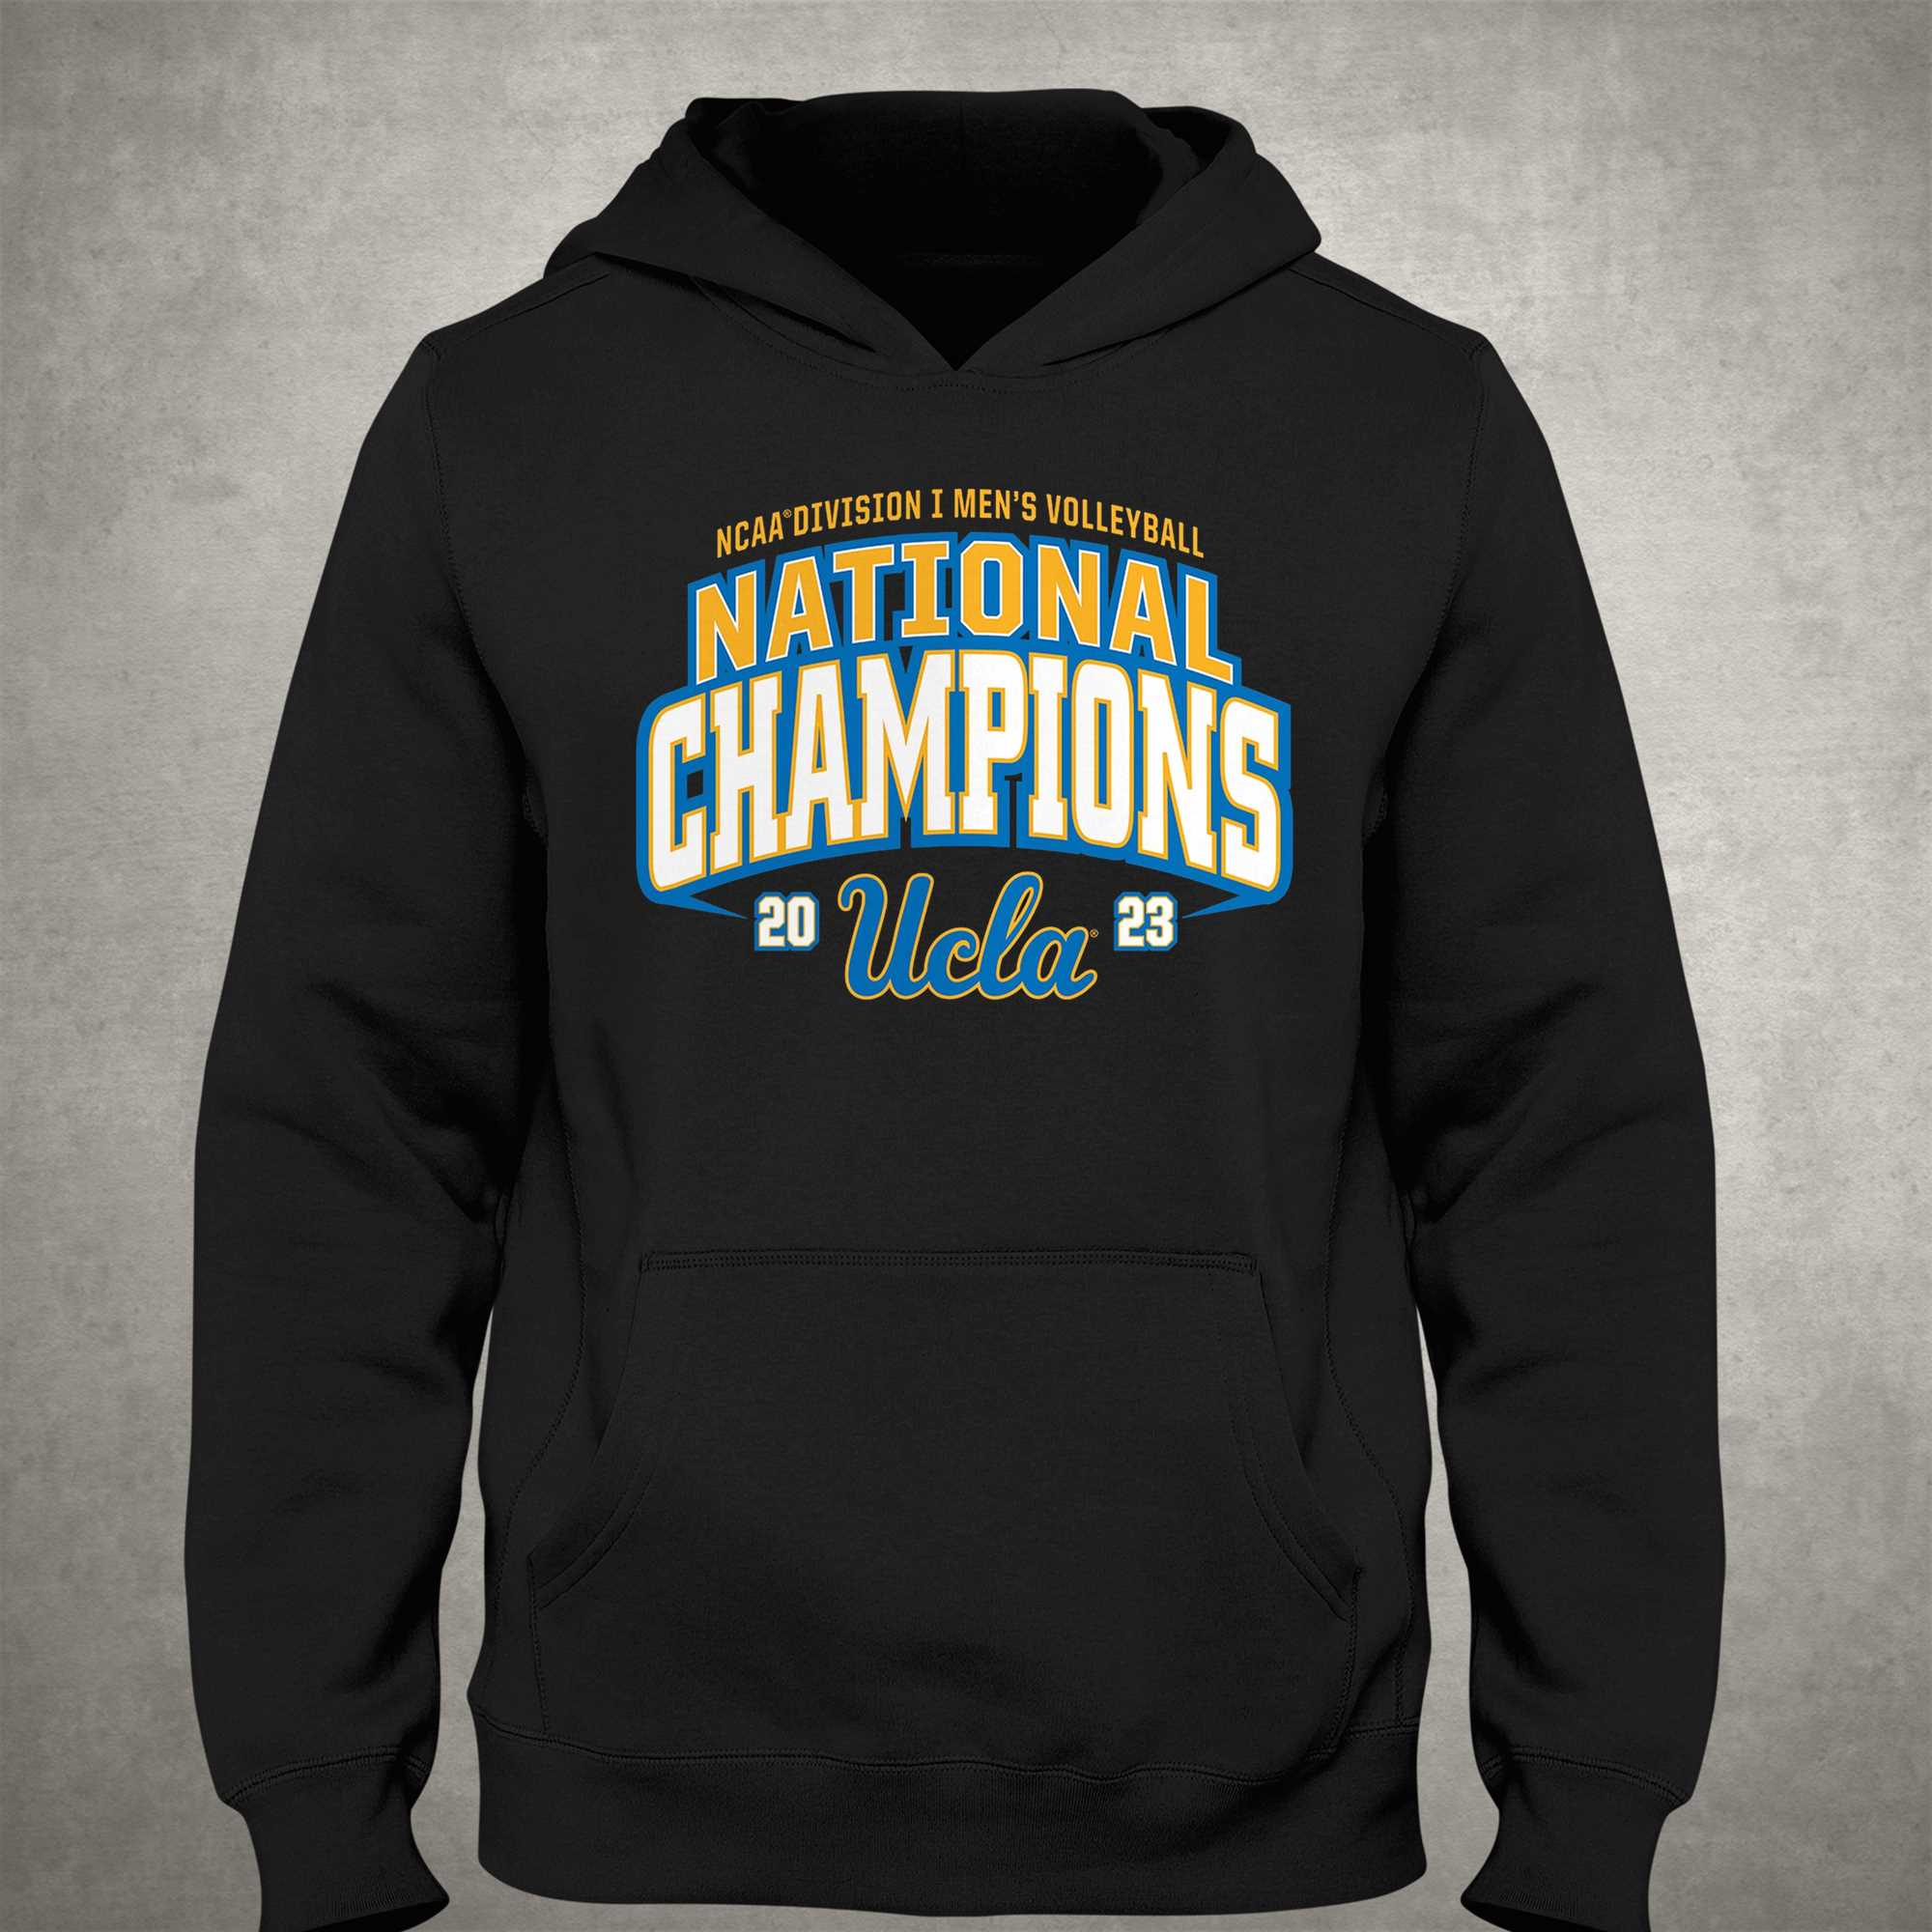 UCLA Bruins Men’s Champion True Blue Pullover Hoodie